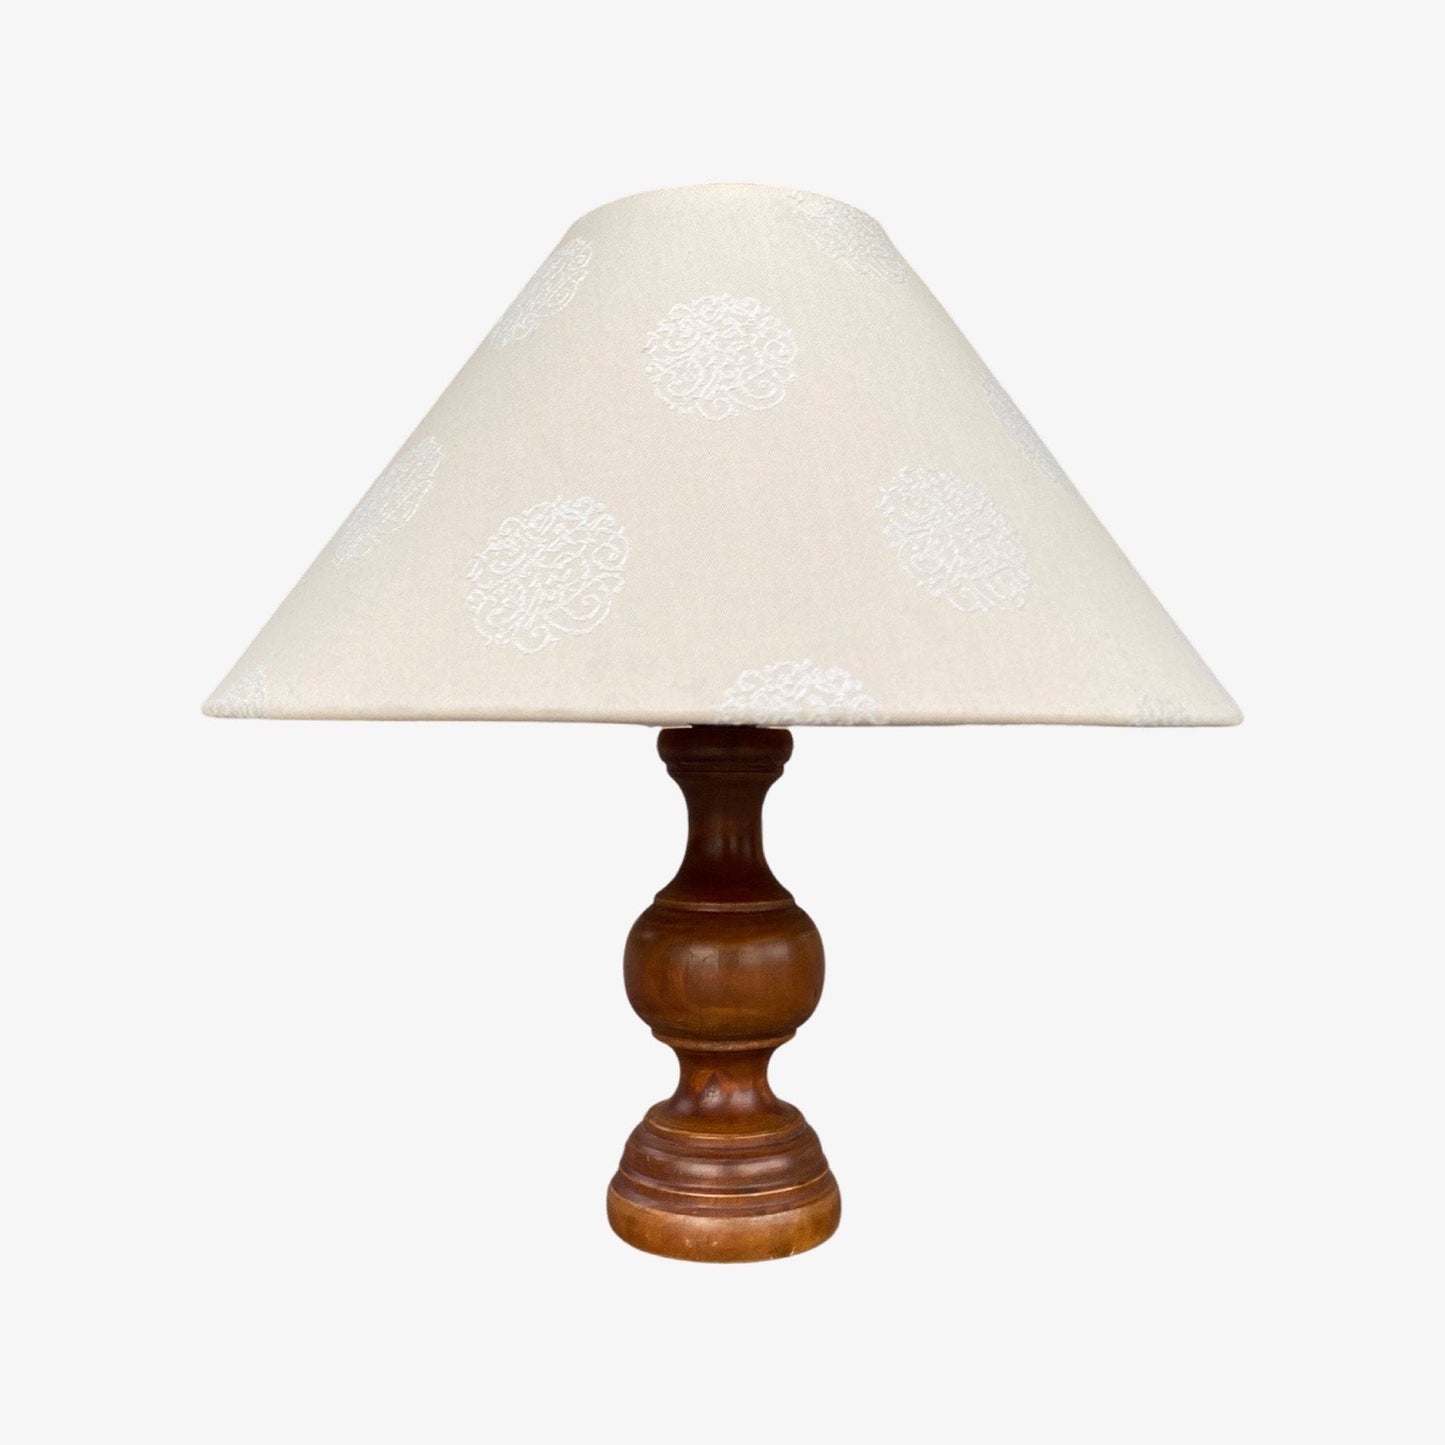 1950s Retro Wooden Table Lamp | Vintage Table Lamp Made Of Dark Wood | Vintage Lighting | Mid Century Modern Lighting | Linen Lampshade